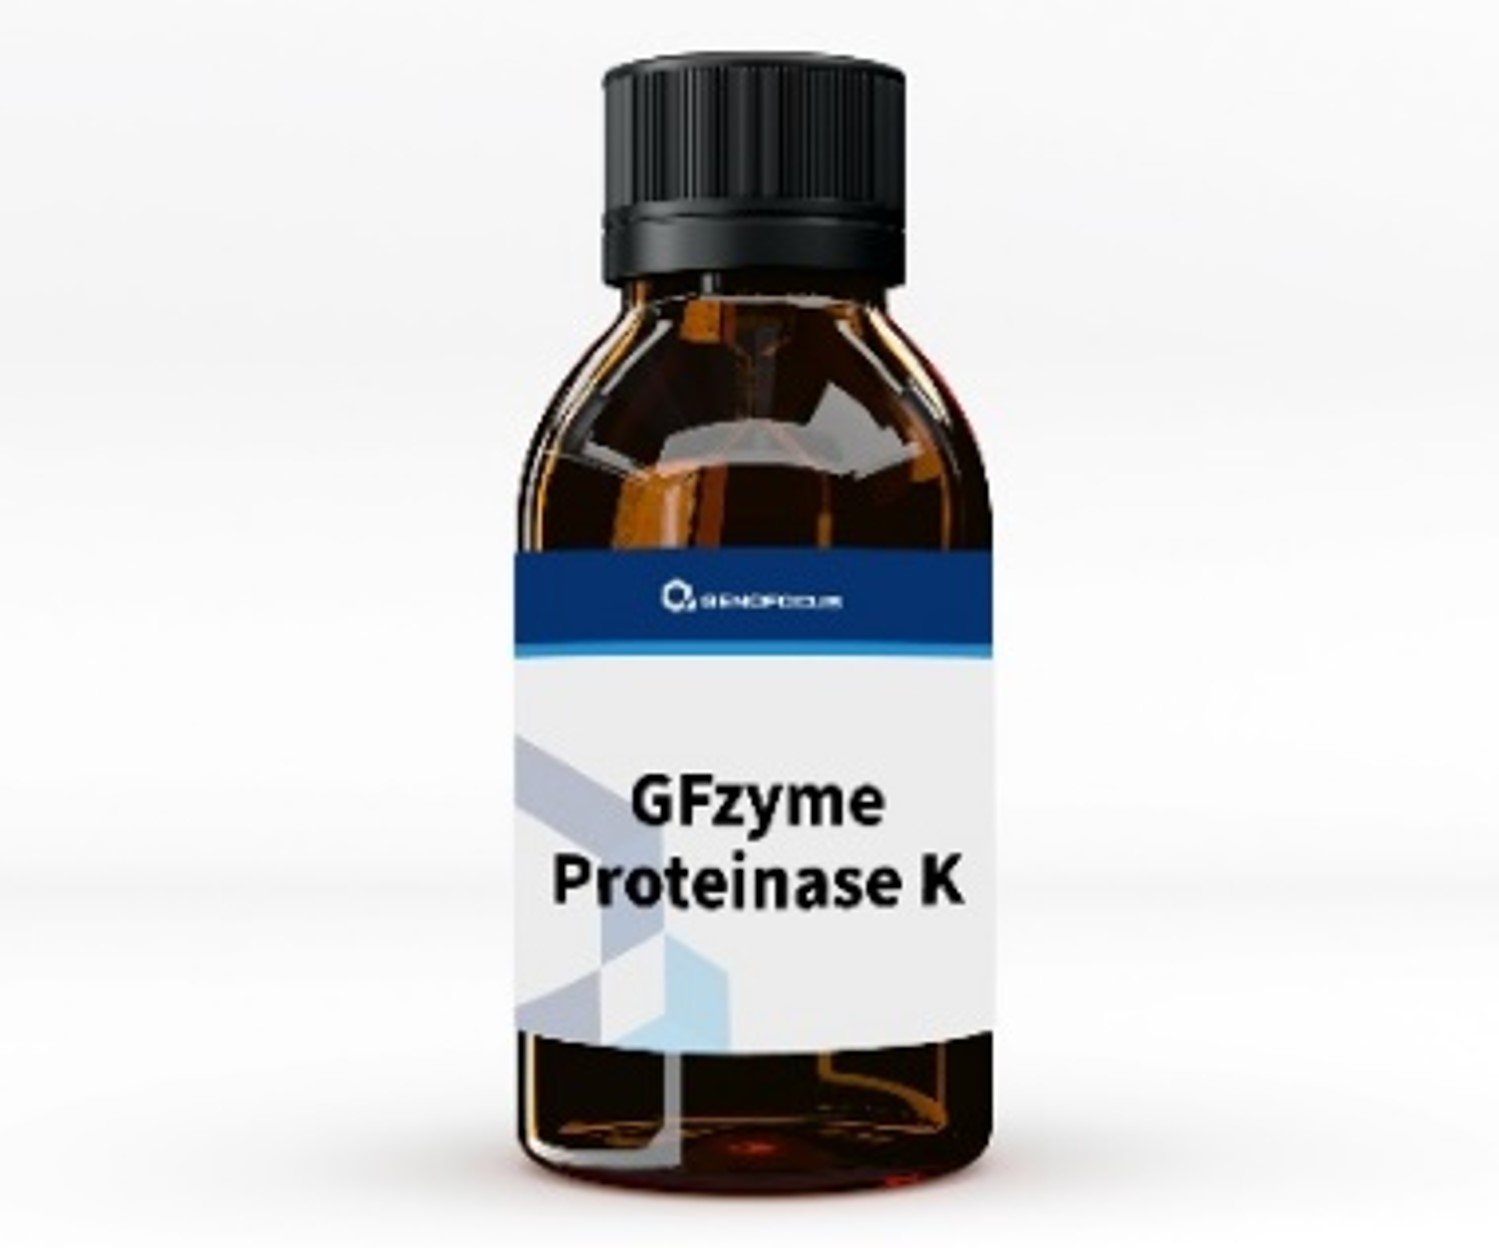 Gfzyme Proteinase K  Made in Korea